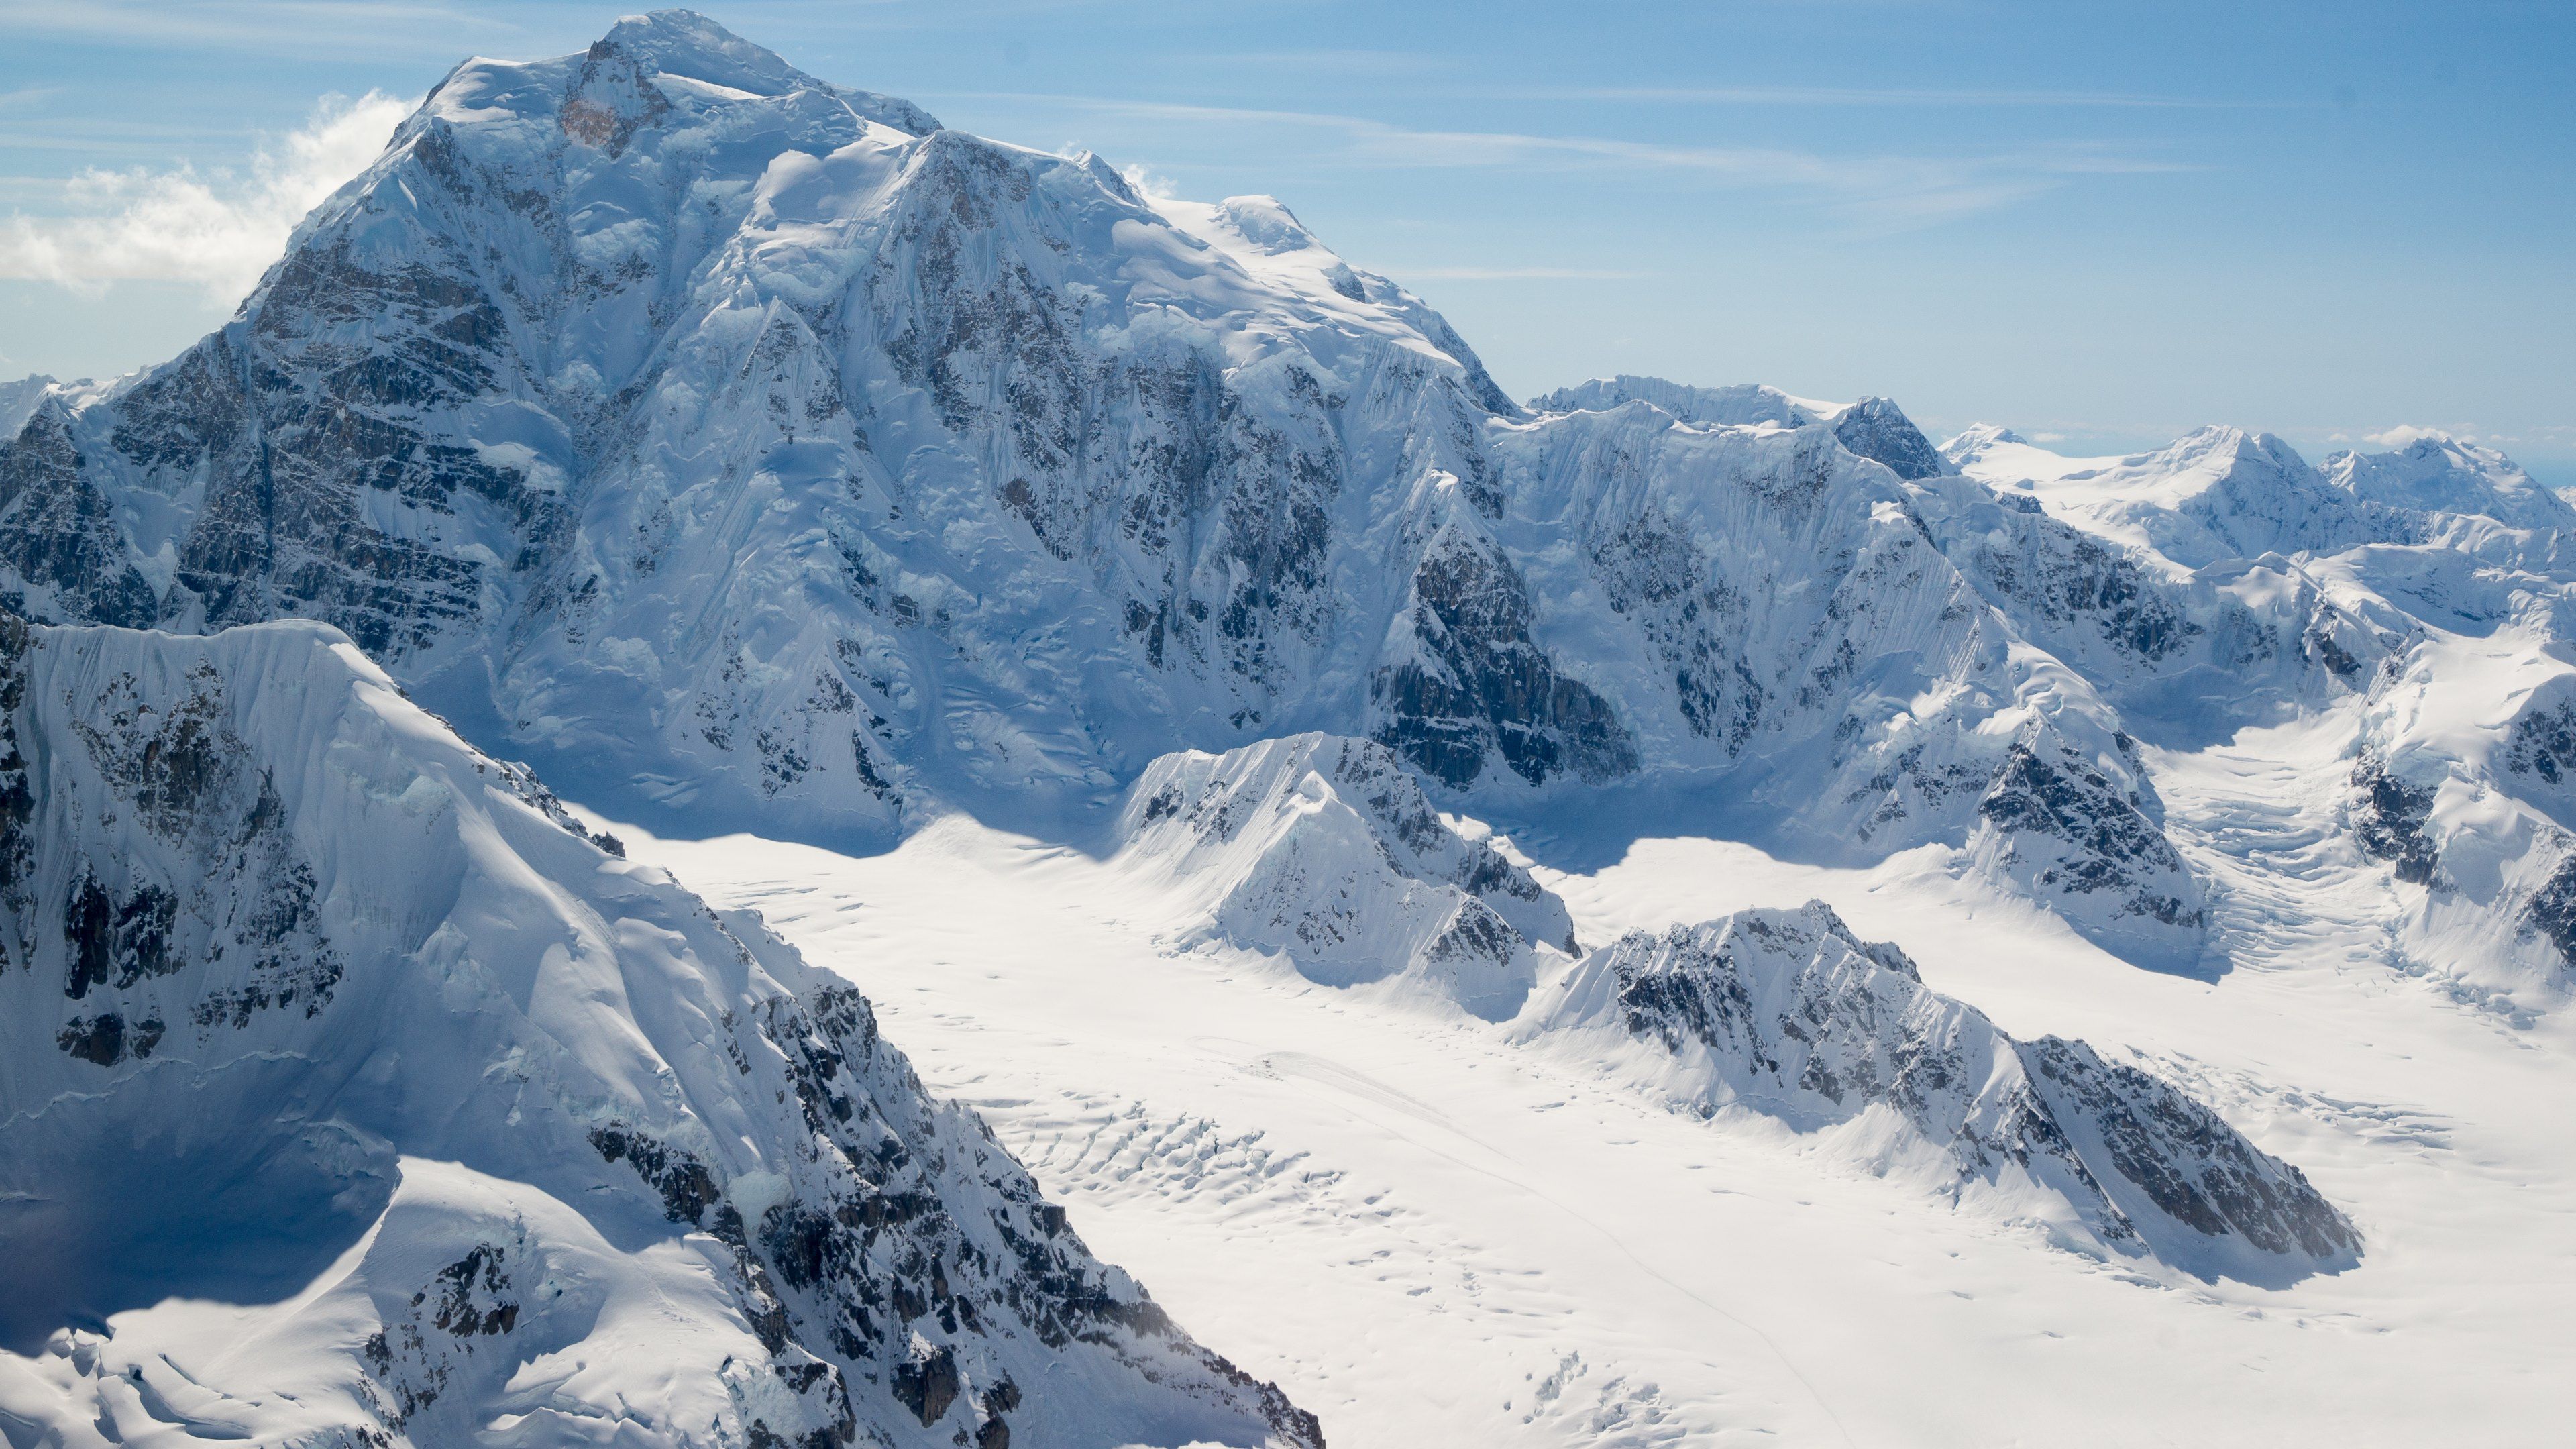 Mountain peaks full of snow 4k Ultra HD Wallpaper. Background